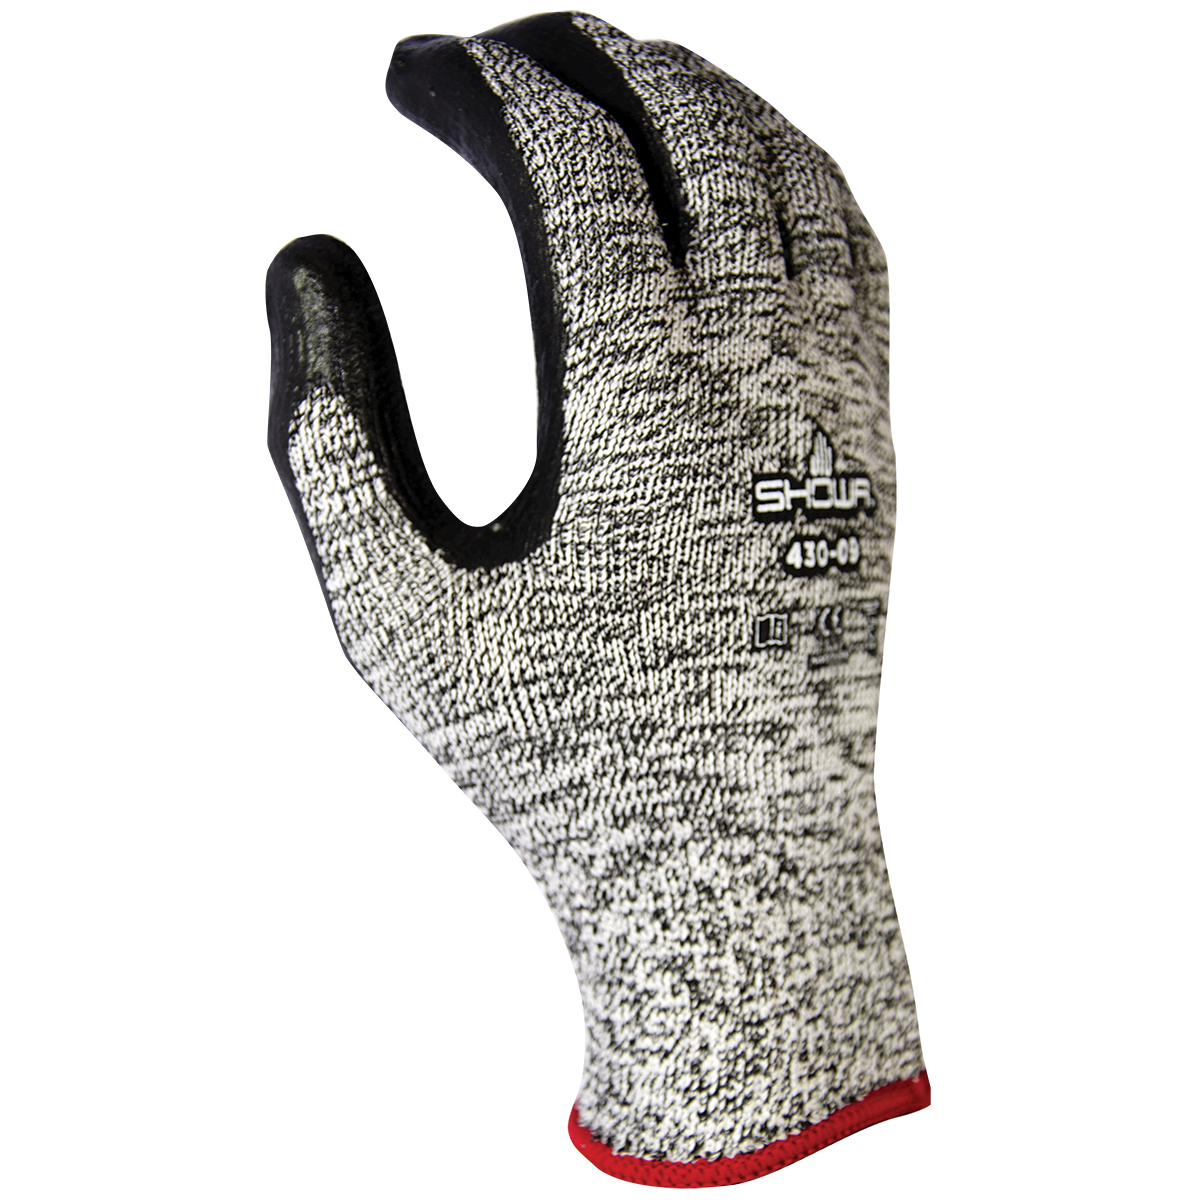 SHOWA® 430 10 Gauge High Performance Polyethylene Cut Resistant Gloves With Bi-Polymer Coating